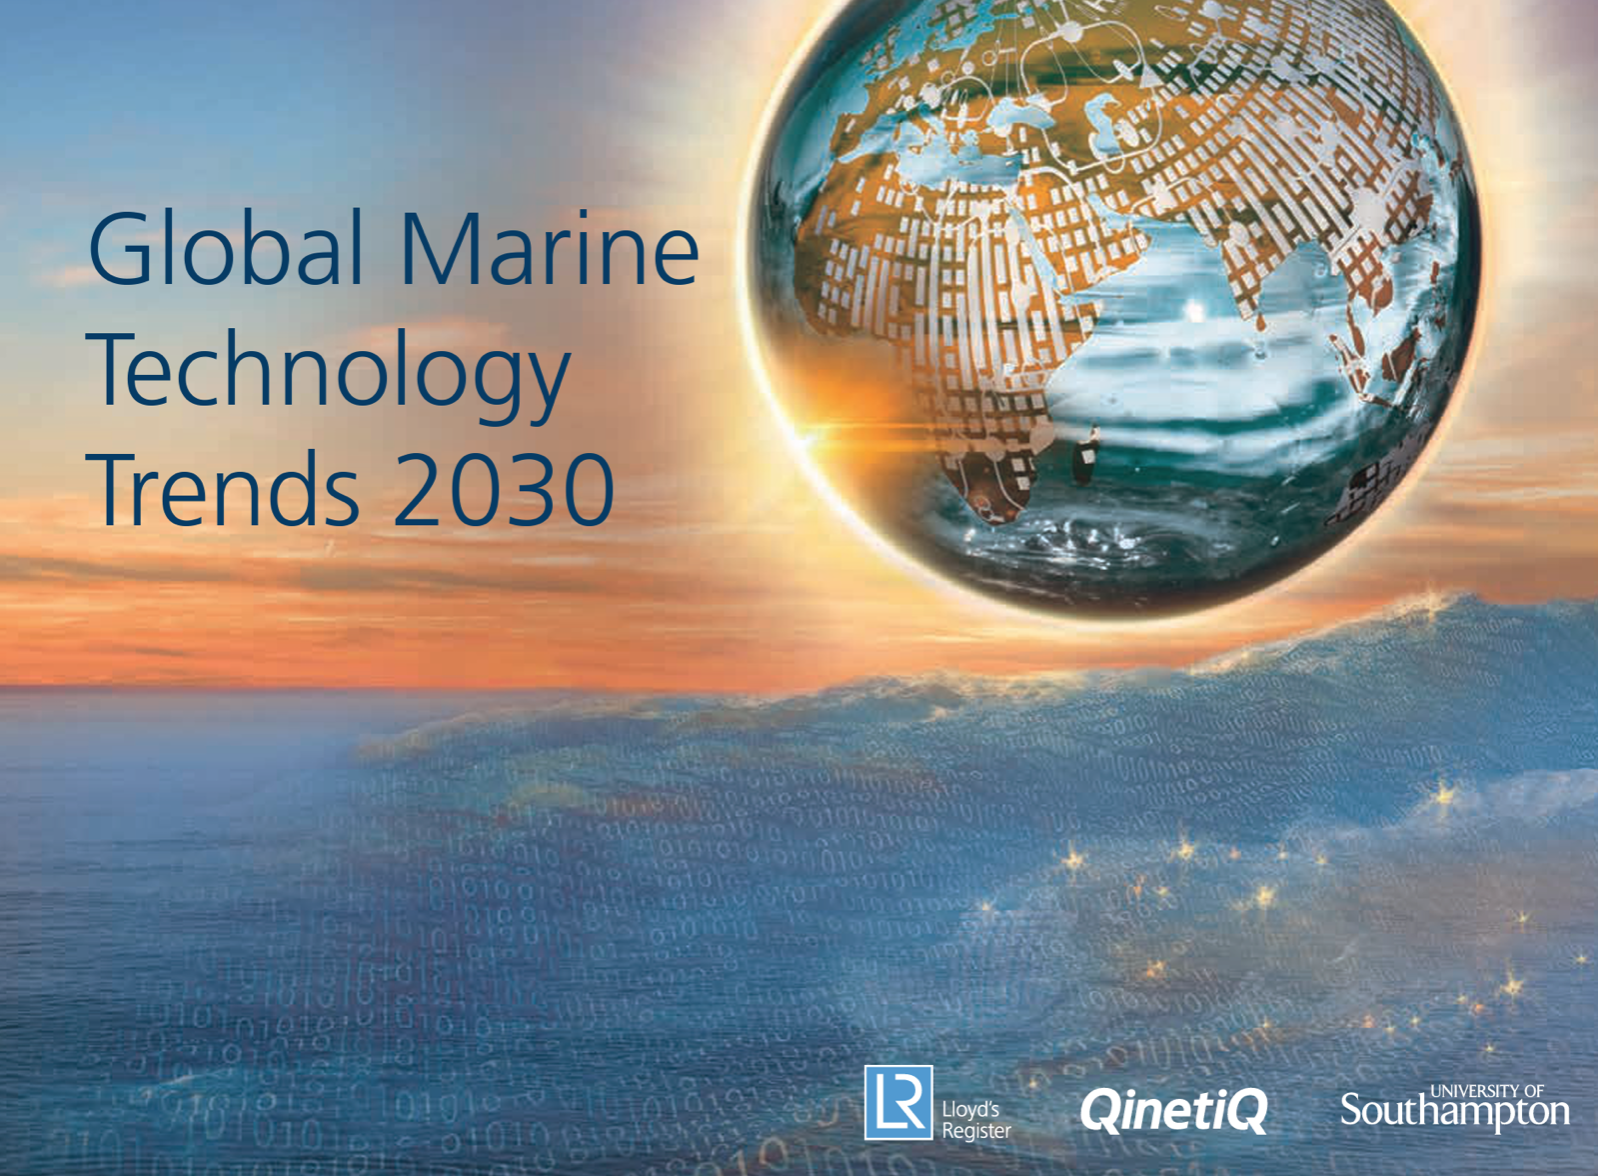 Global Marine Technology Trends 2030 